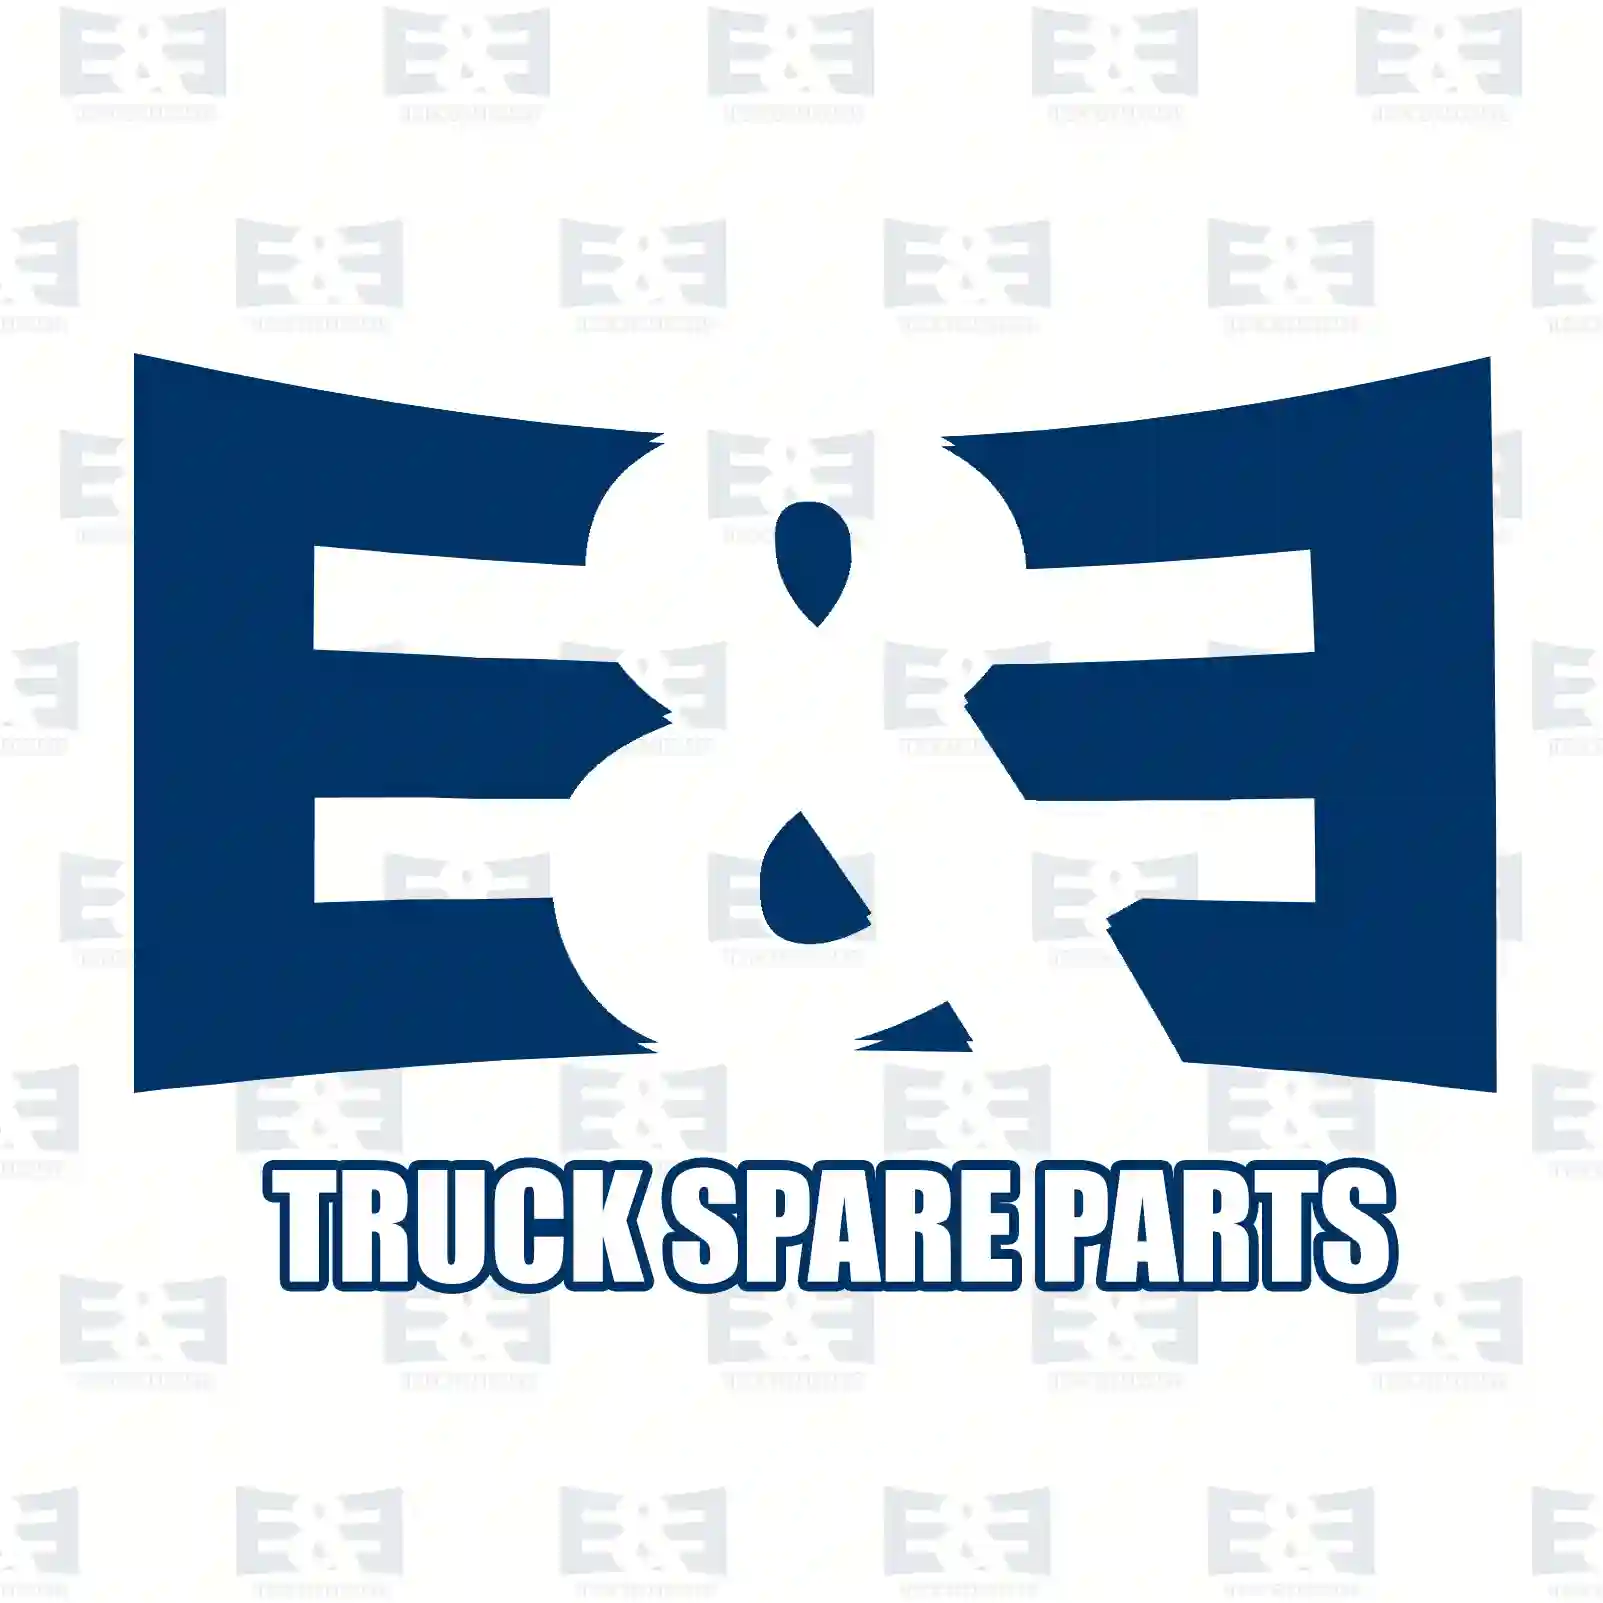 Control Arm Control arm, EE No 2E2270656 ,  oem no:1152381, 81432506020, 81432506023 E&E Truck Spare Parts | Truck Spare Parts, Auotomotive Spare Parts